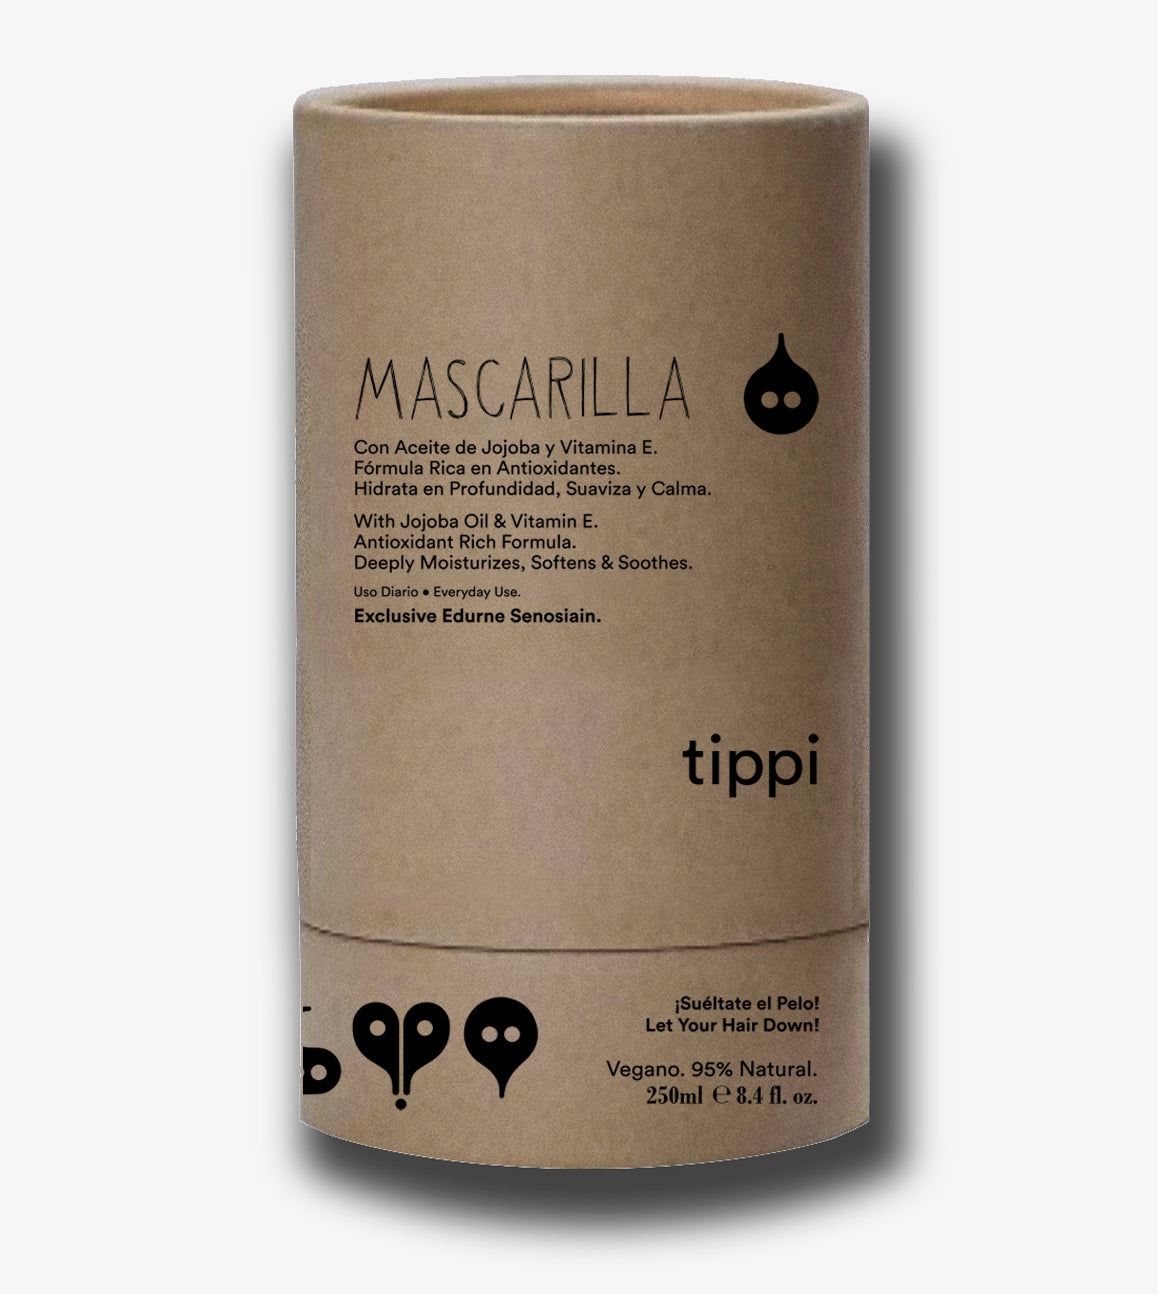 Mascarilla TIPPI by Edurne Senosiain 250ML